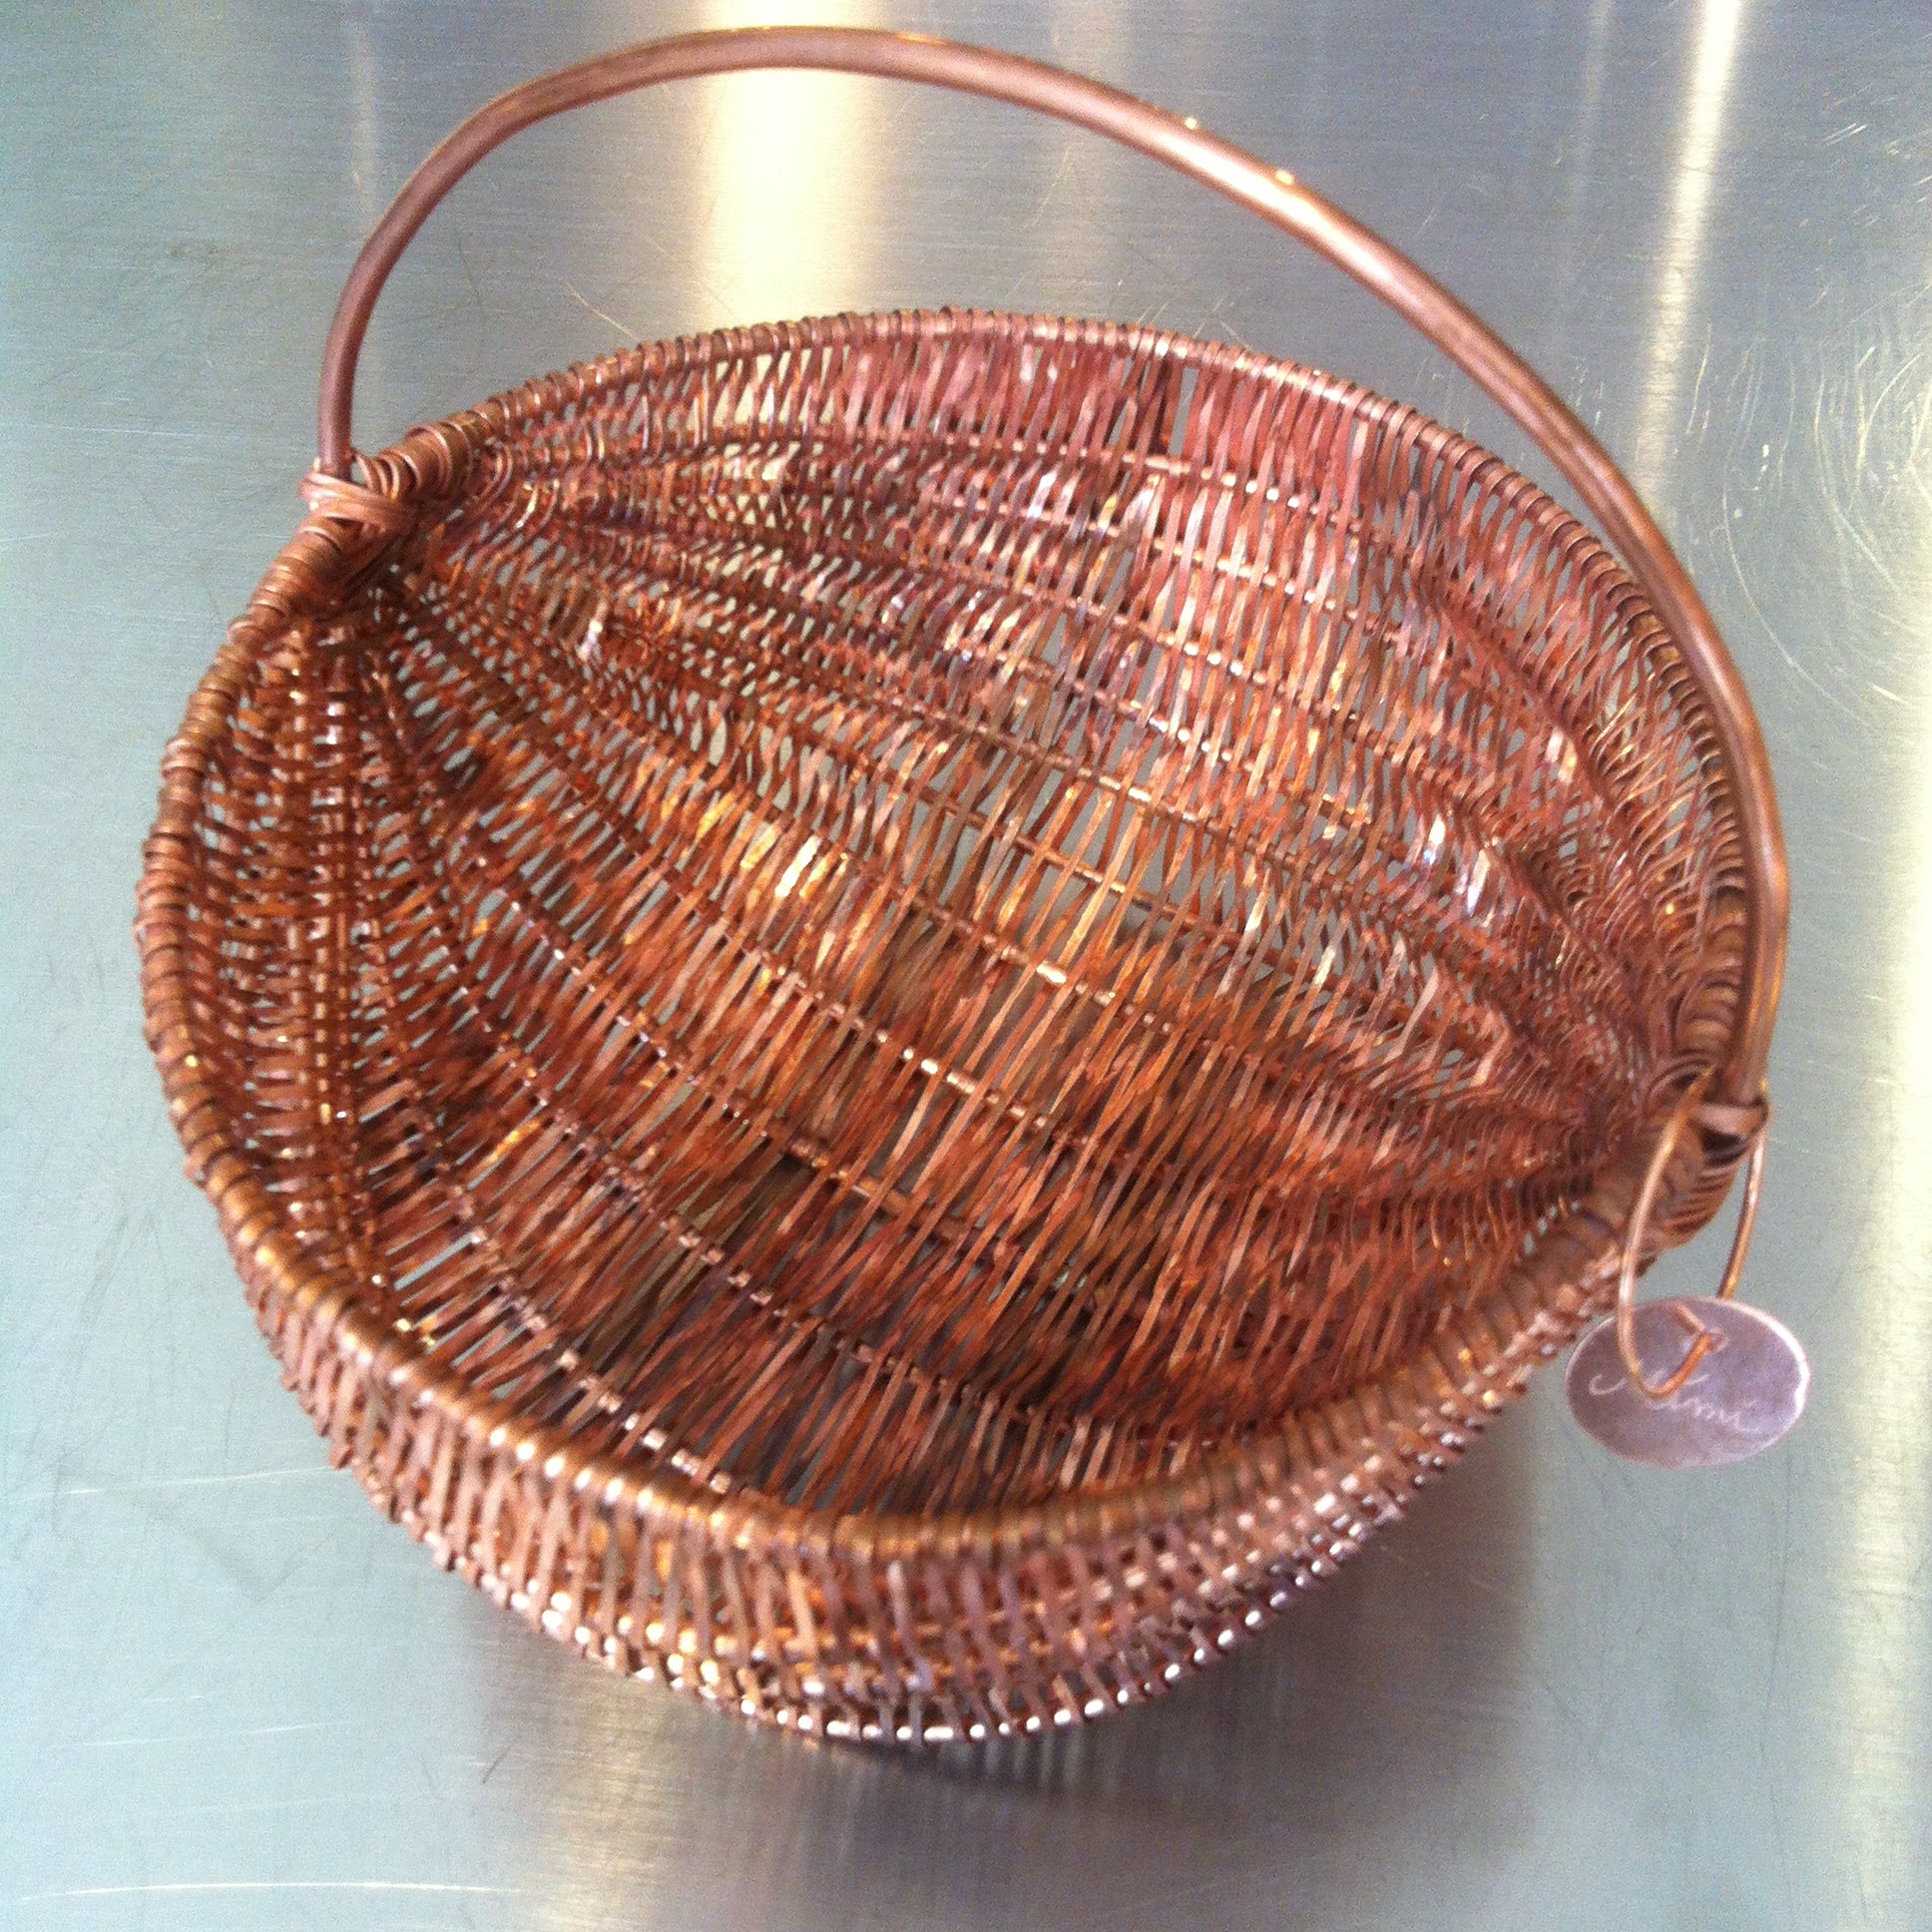 Copper Basket 6" x 5"